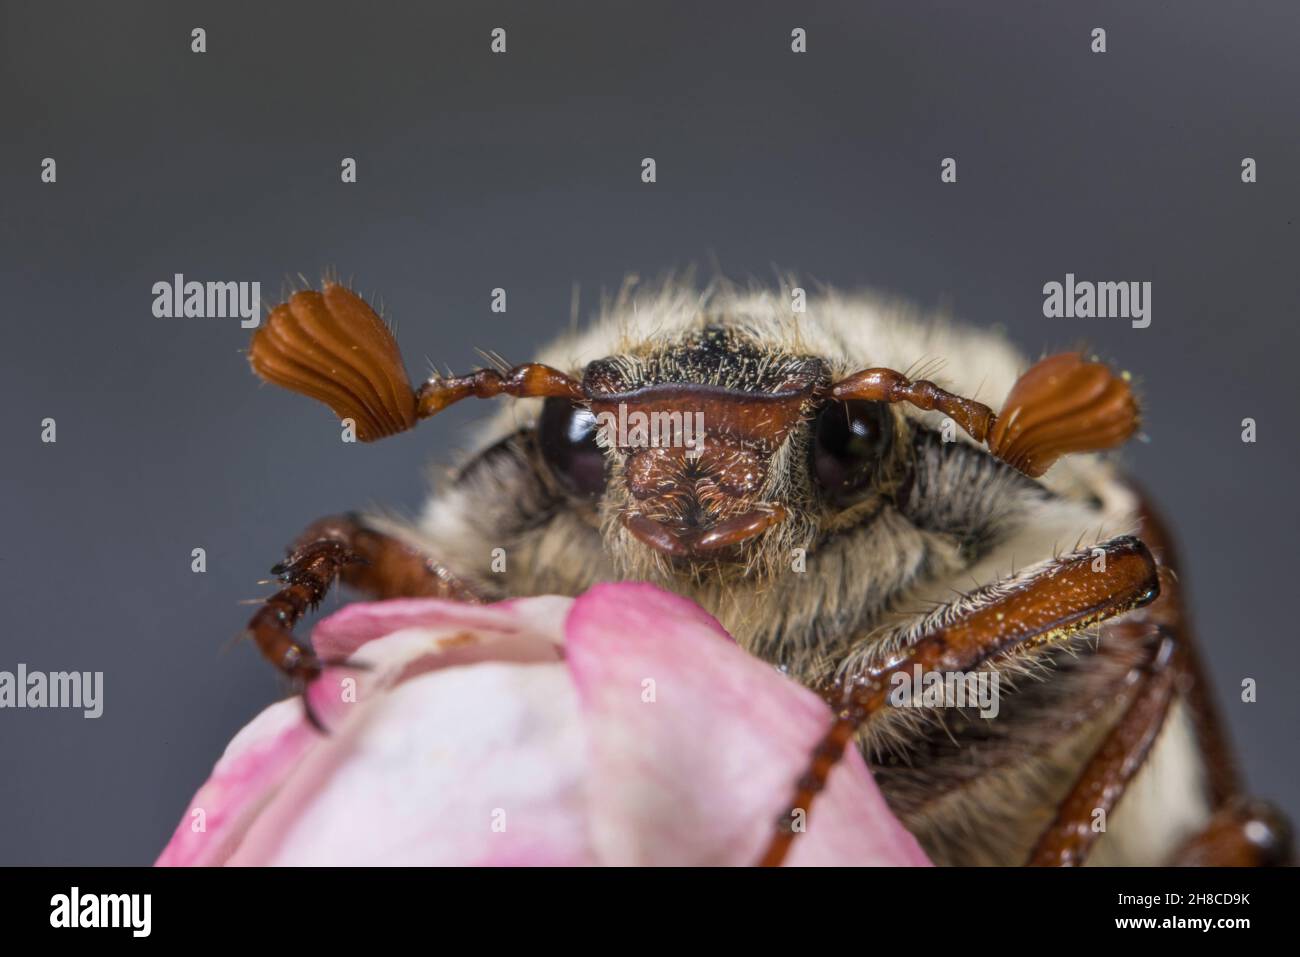 Common cockchafer, Maybug, Maybeetle (Melolontha melolontha), sitting on apple flower, portrait, Germany Stock Photo